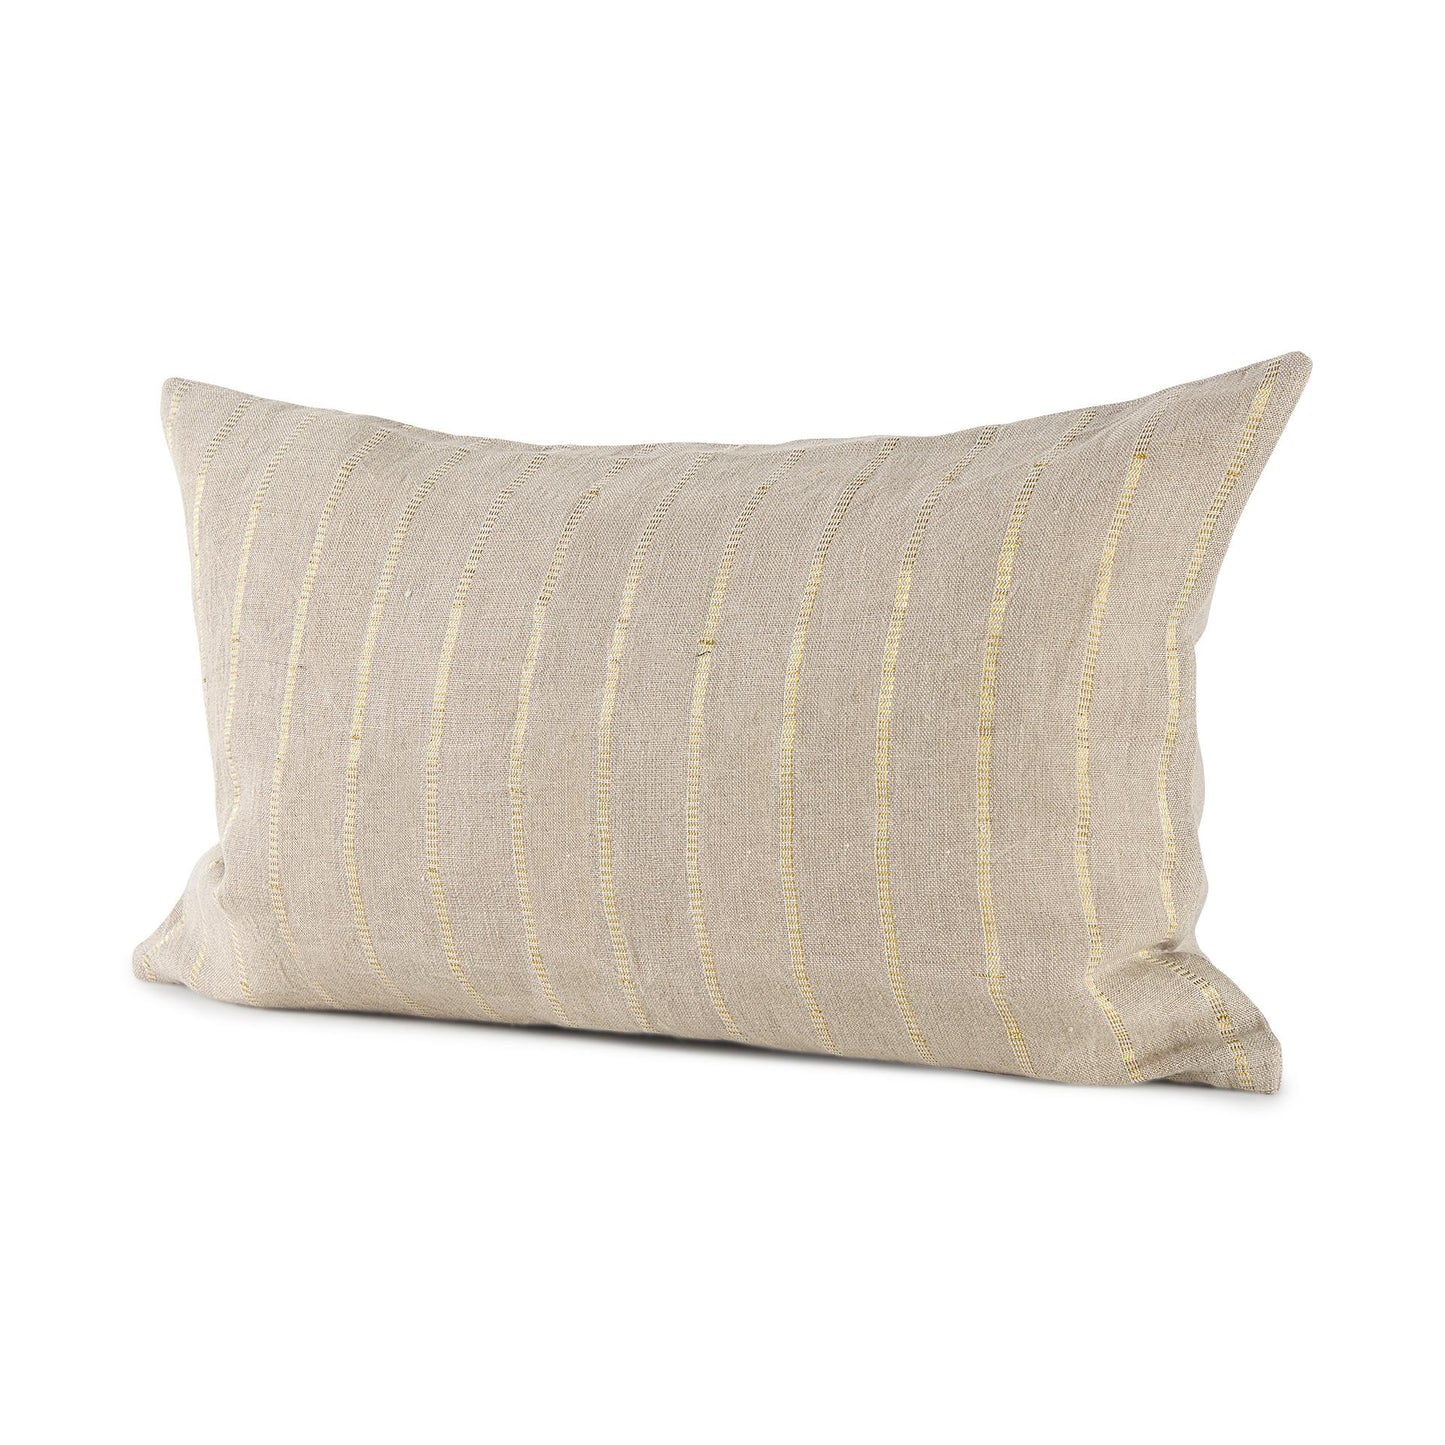 Danika 13.0L x 21.0W x 0.2H Beige and Gold Fabric Decorative Pillow Cover